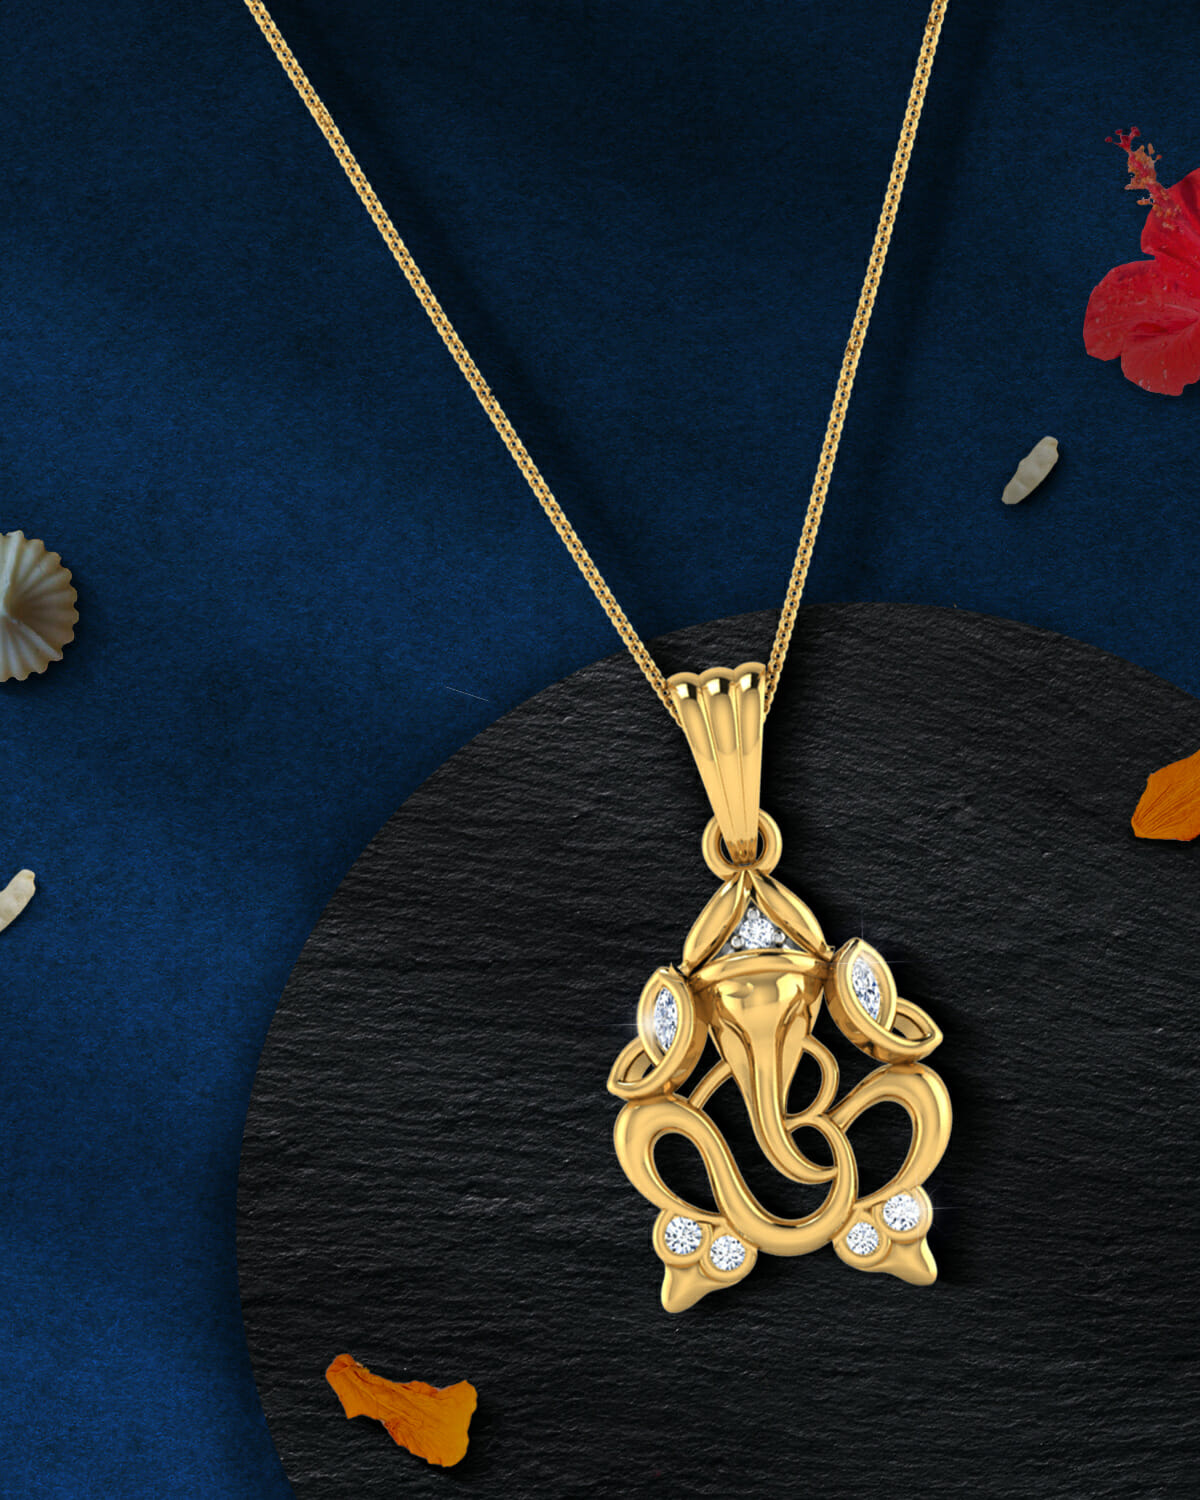 Ganesha Inspired Diamond Jewellery Designs - Only Natural Diamonds